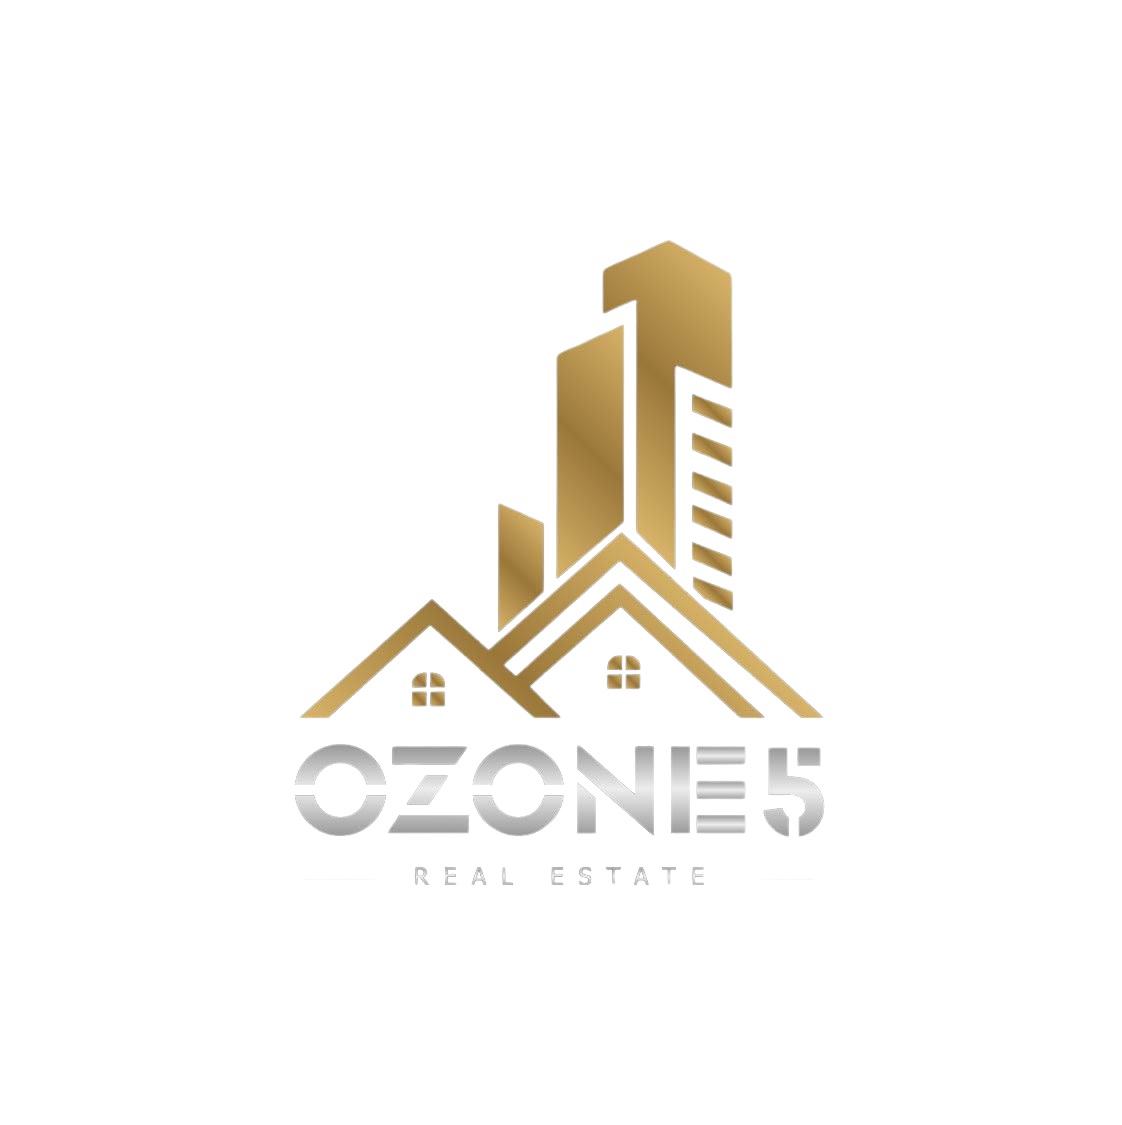 Ozone 5 Real Estate